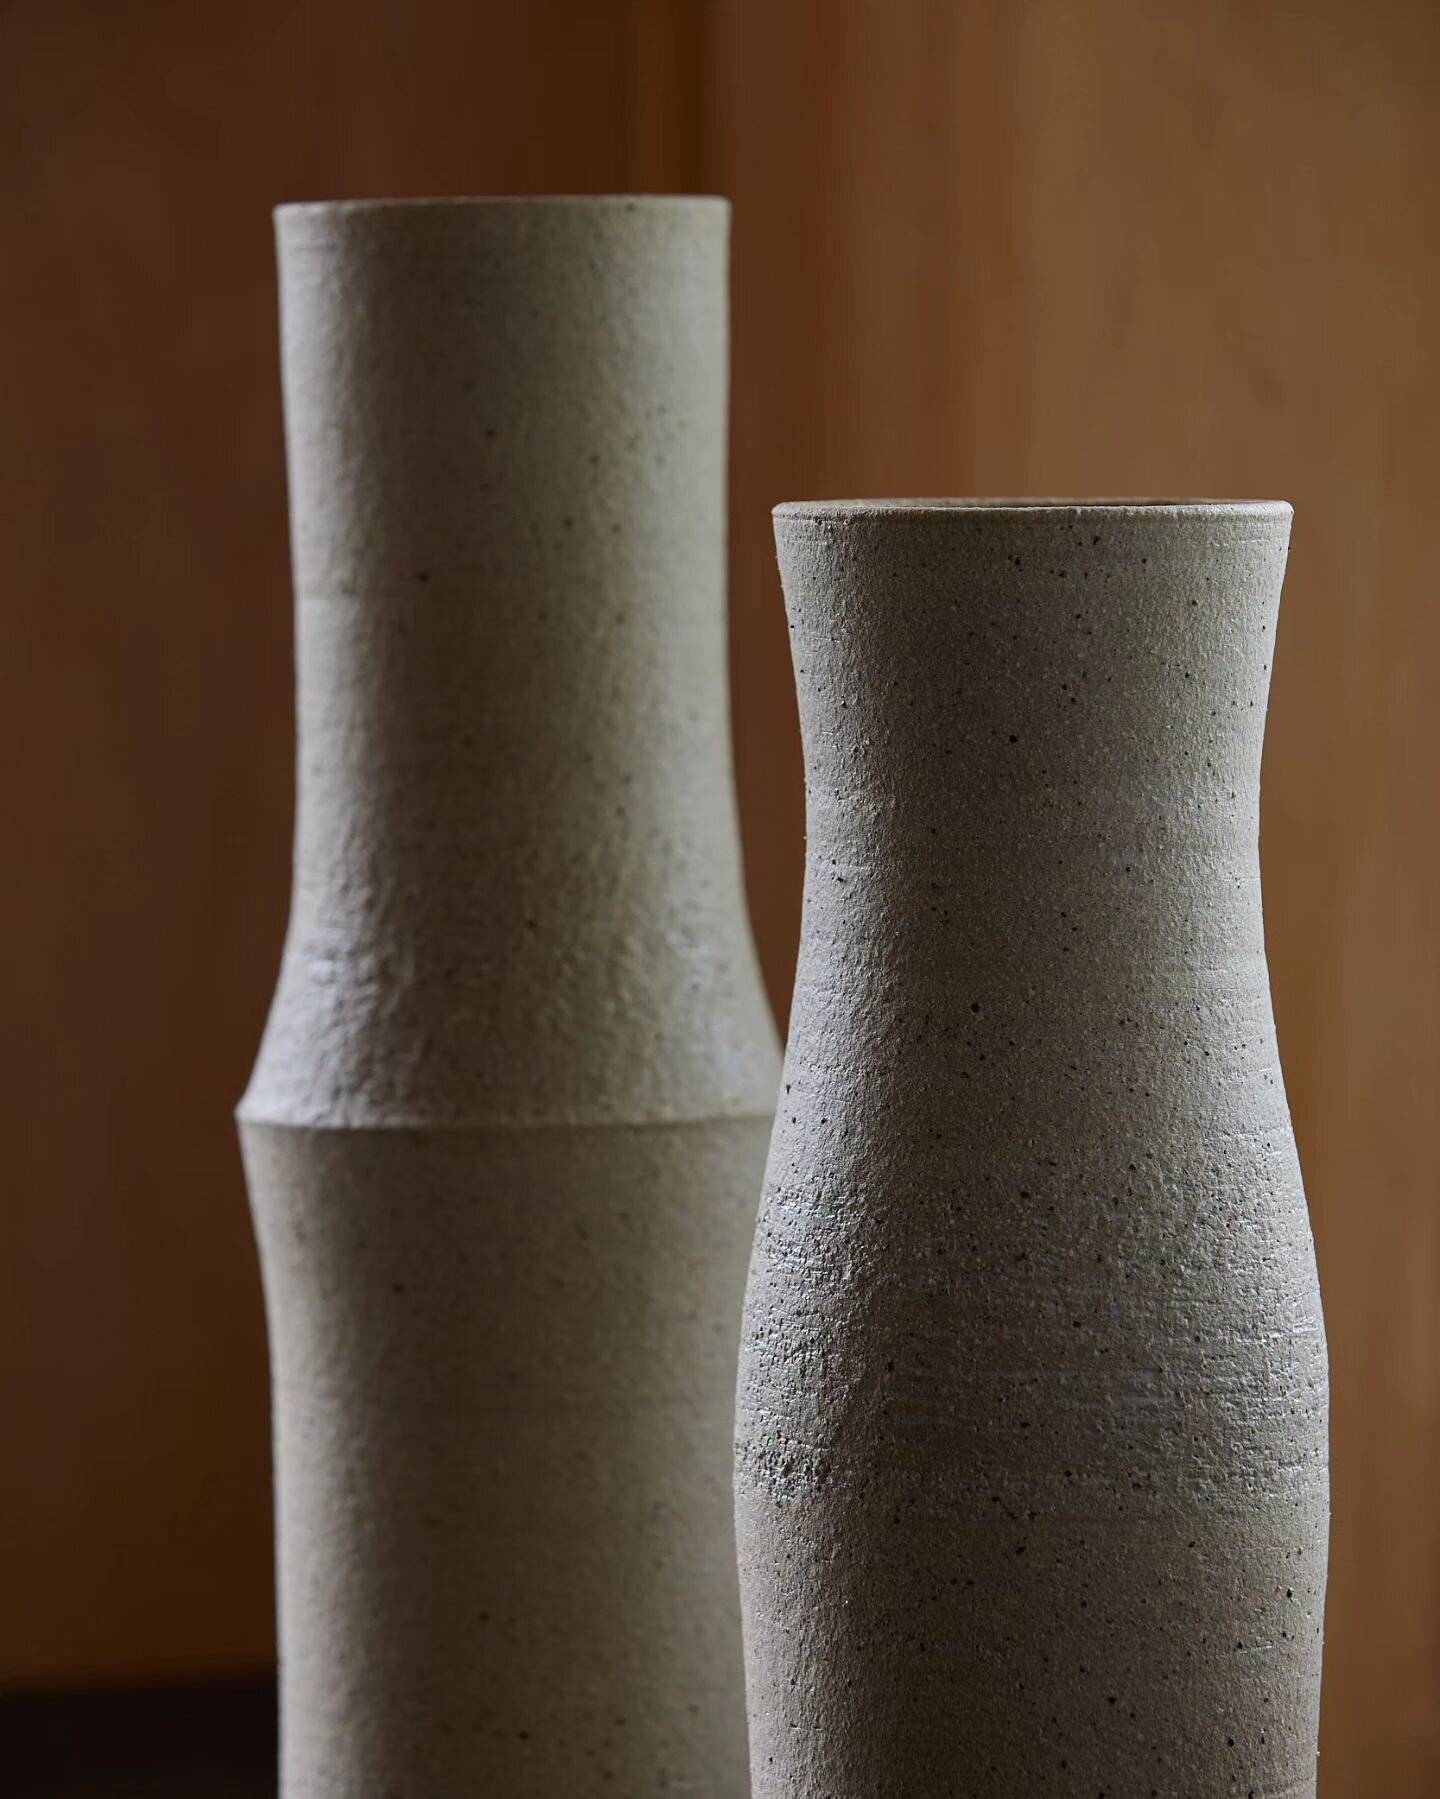 Touch..texture...
Vases

Photo by @simon.c.wilson